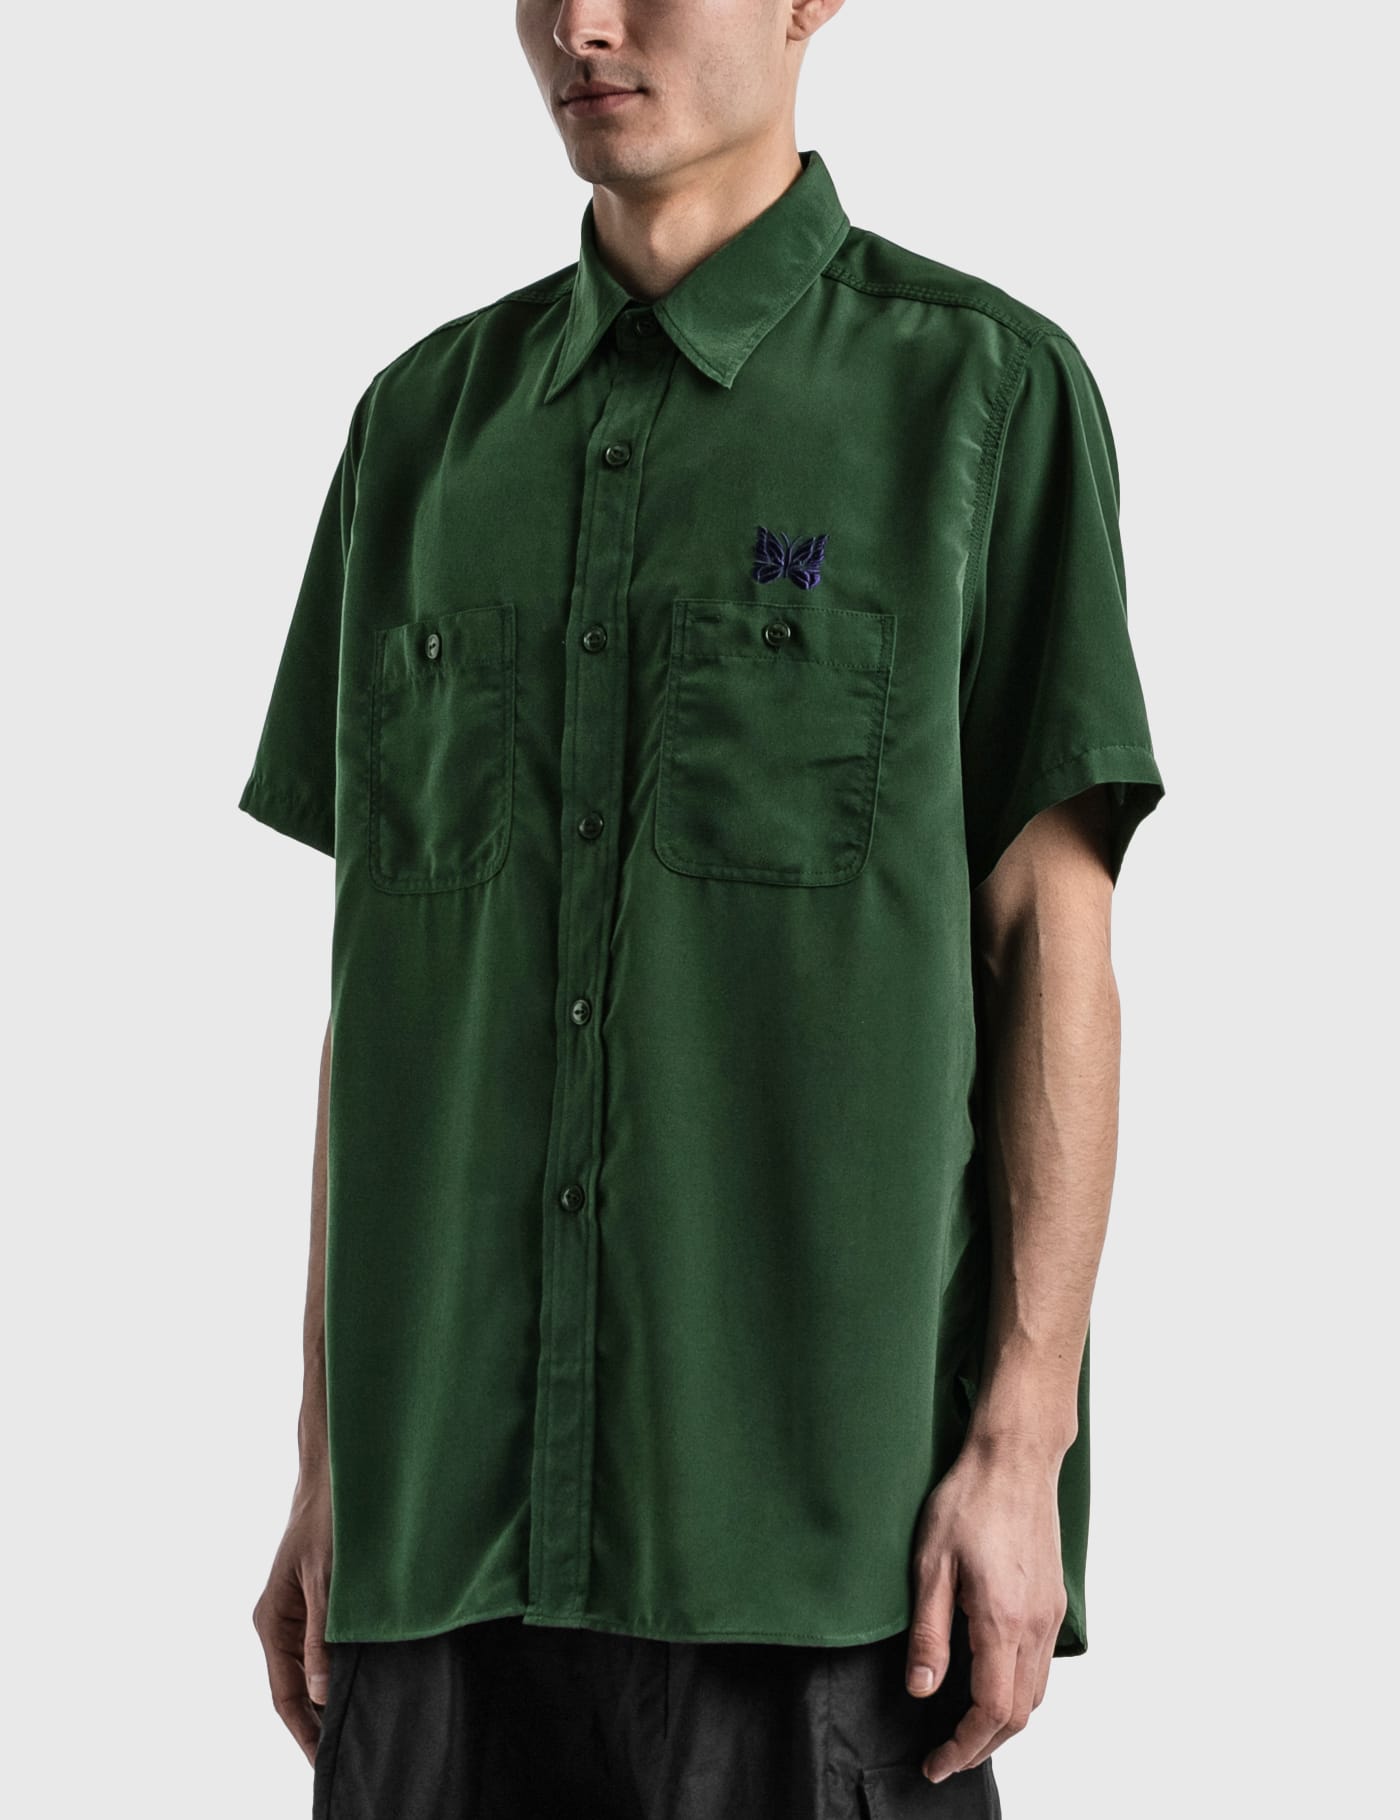 Needles - Short Sleeve Work Shirt | HBX - Globally Curated Fashion